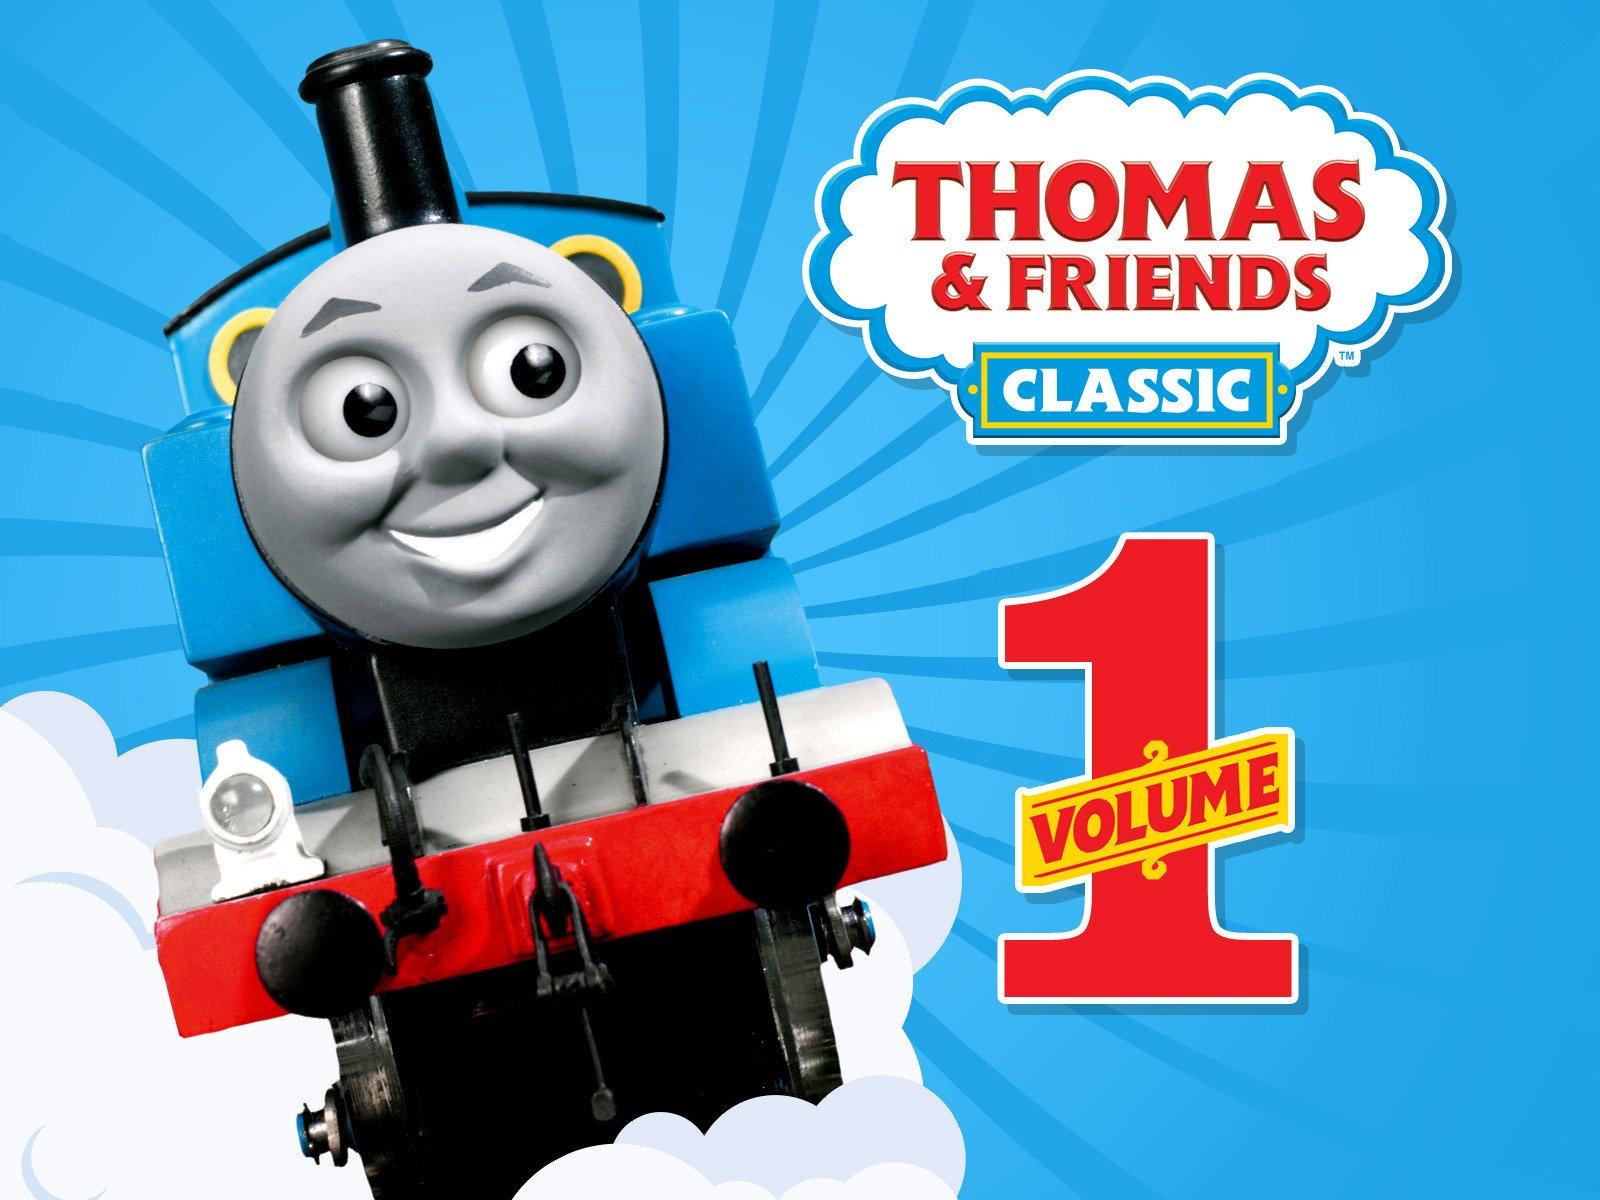 Thomas & Friends Classic Volume 1. Thomas the Tank Engine